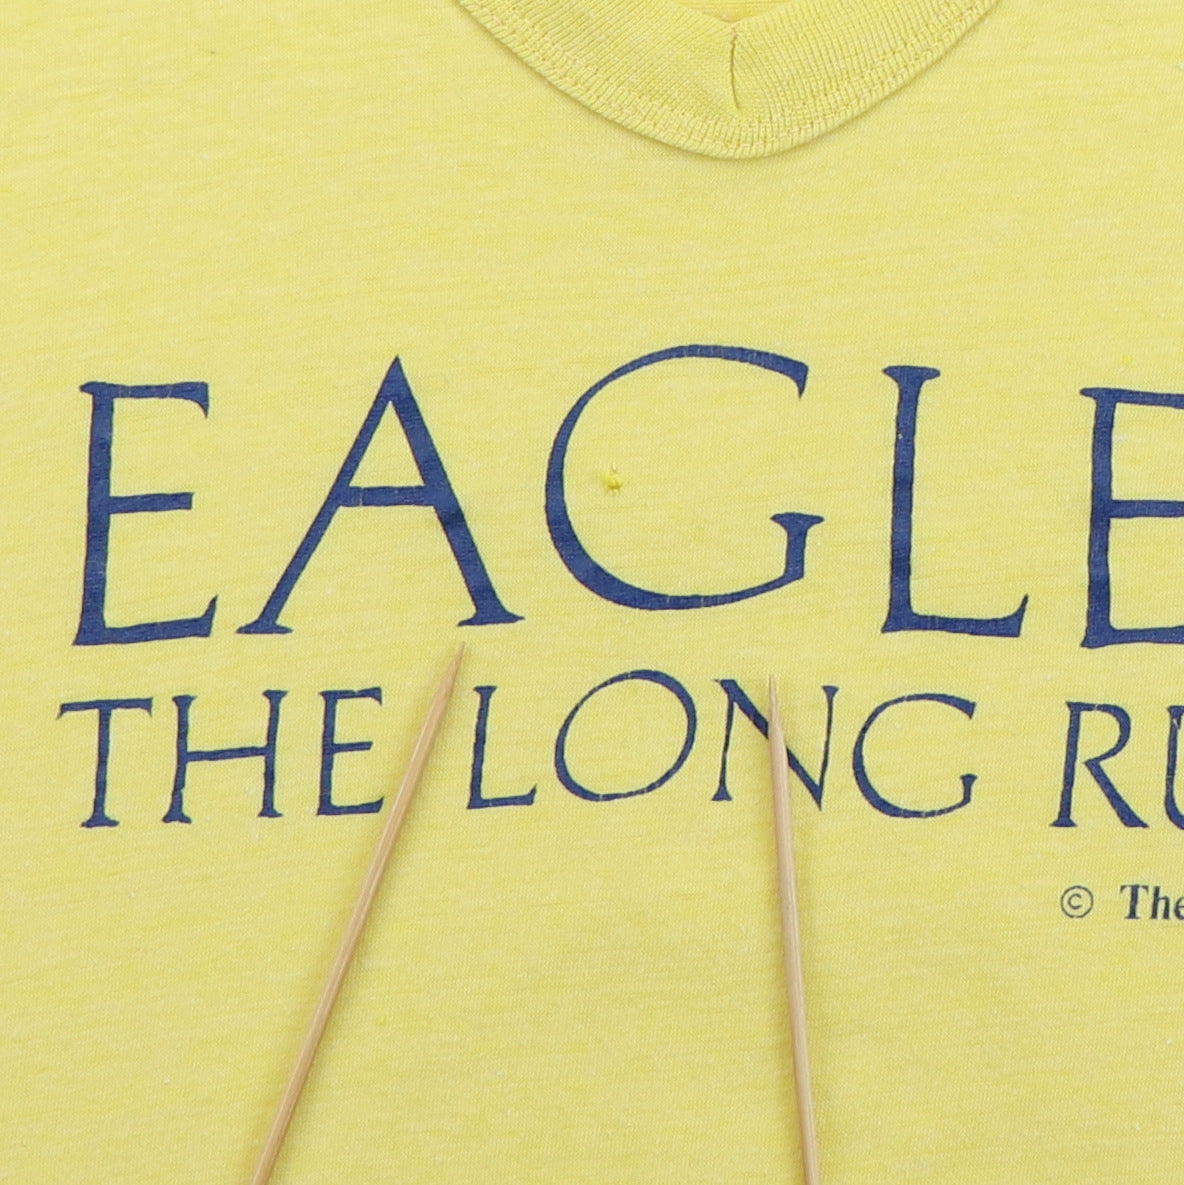 1979 Eagles The Long Run Promo Shirt